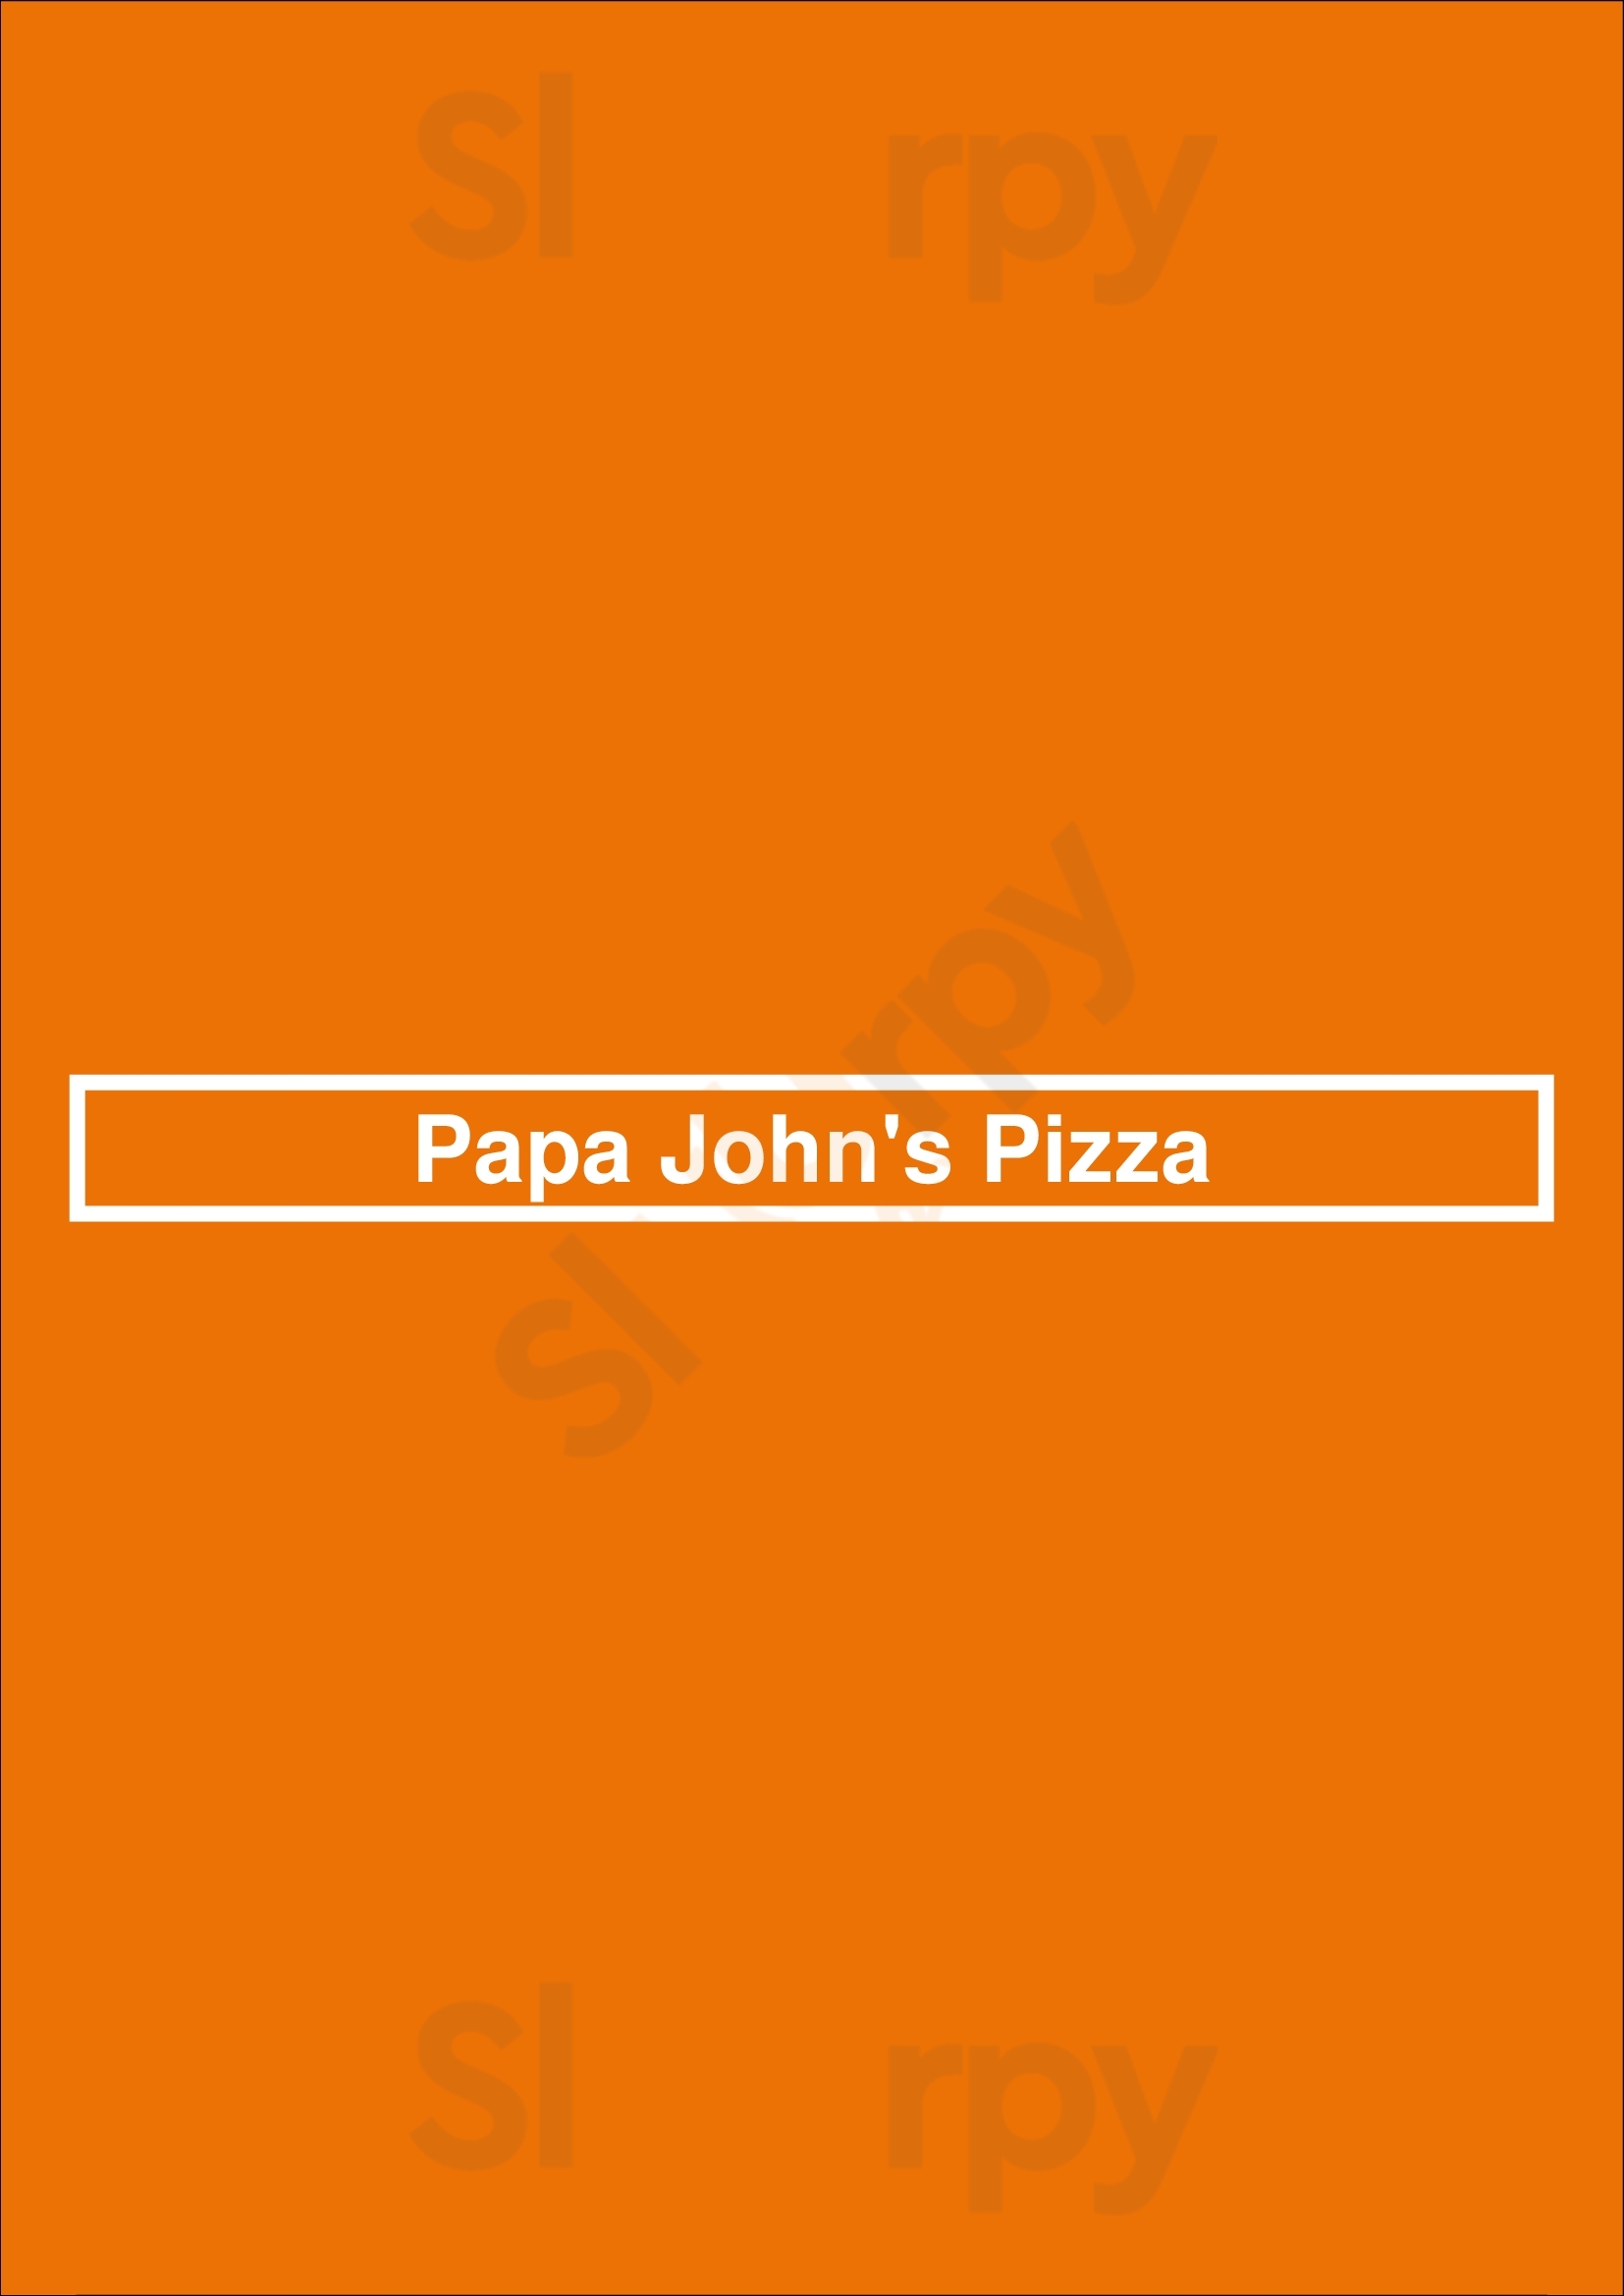 Papa Johns Pizza London Menu - 1